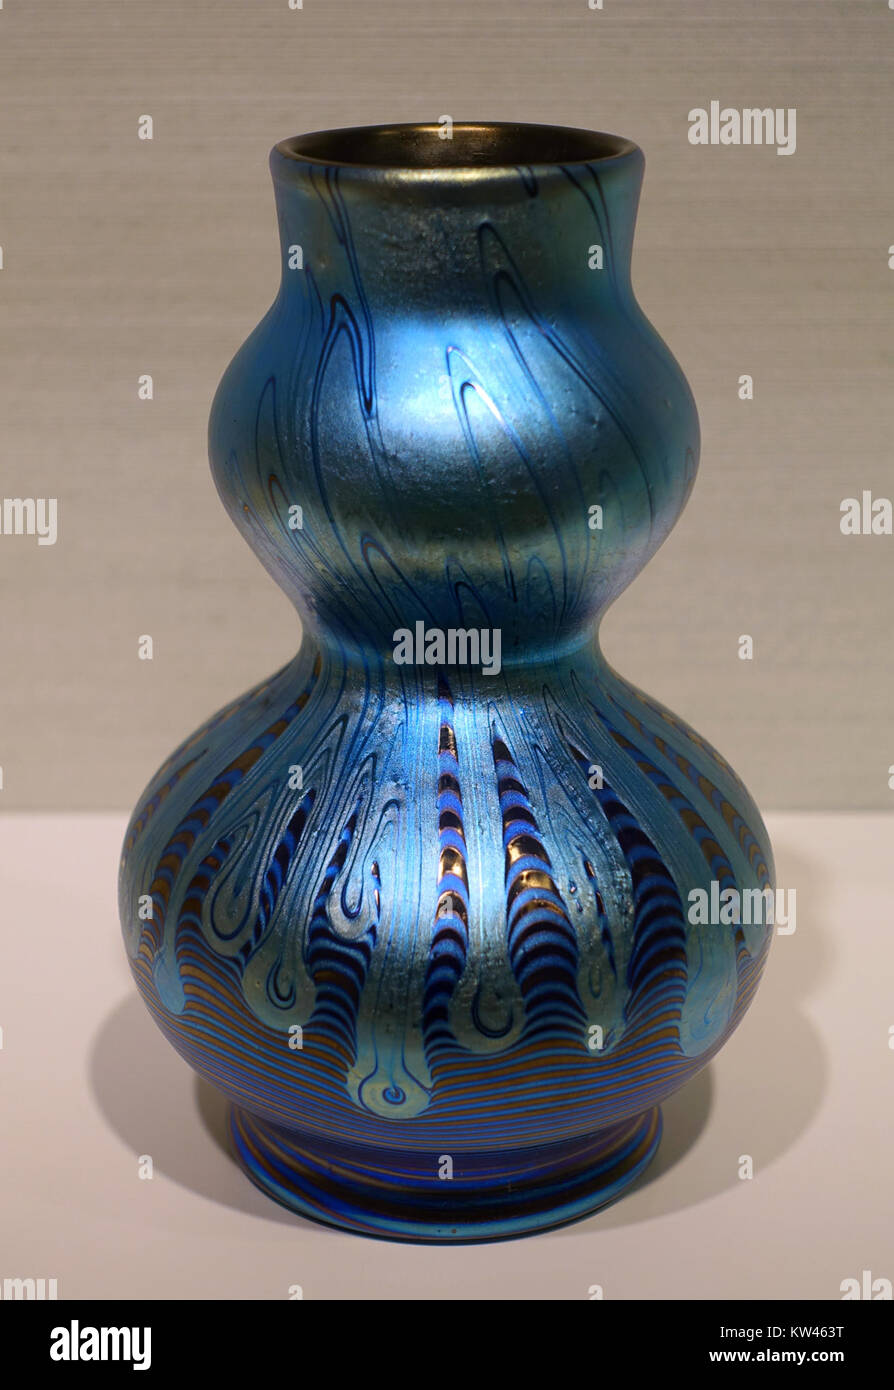 Blue vase, Firma Johann Loetz Witwe, Klostermuhle Bohmen, c. 1900, glass   Hessisches Landesmuseum Darmstadt   Darmstadt, Germany   DSC00851 Stock Photo